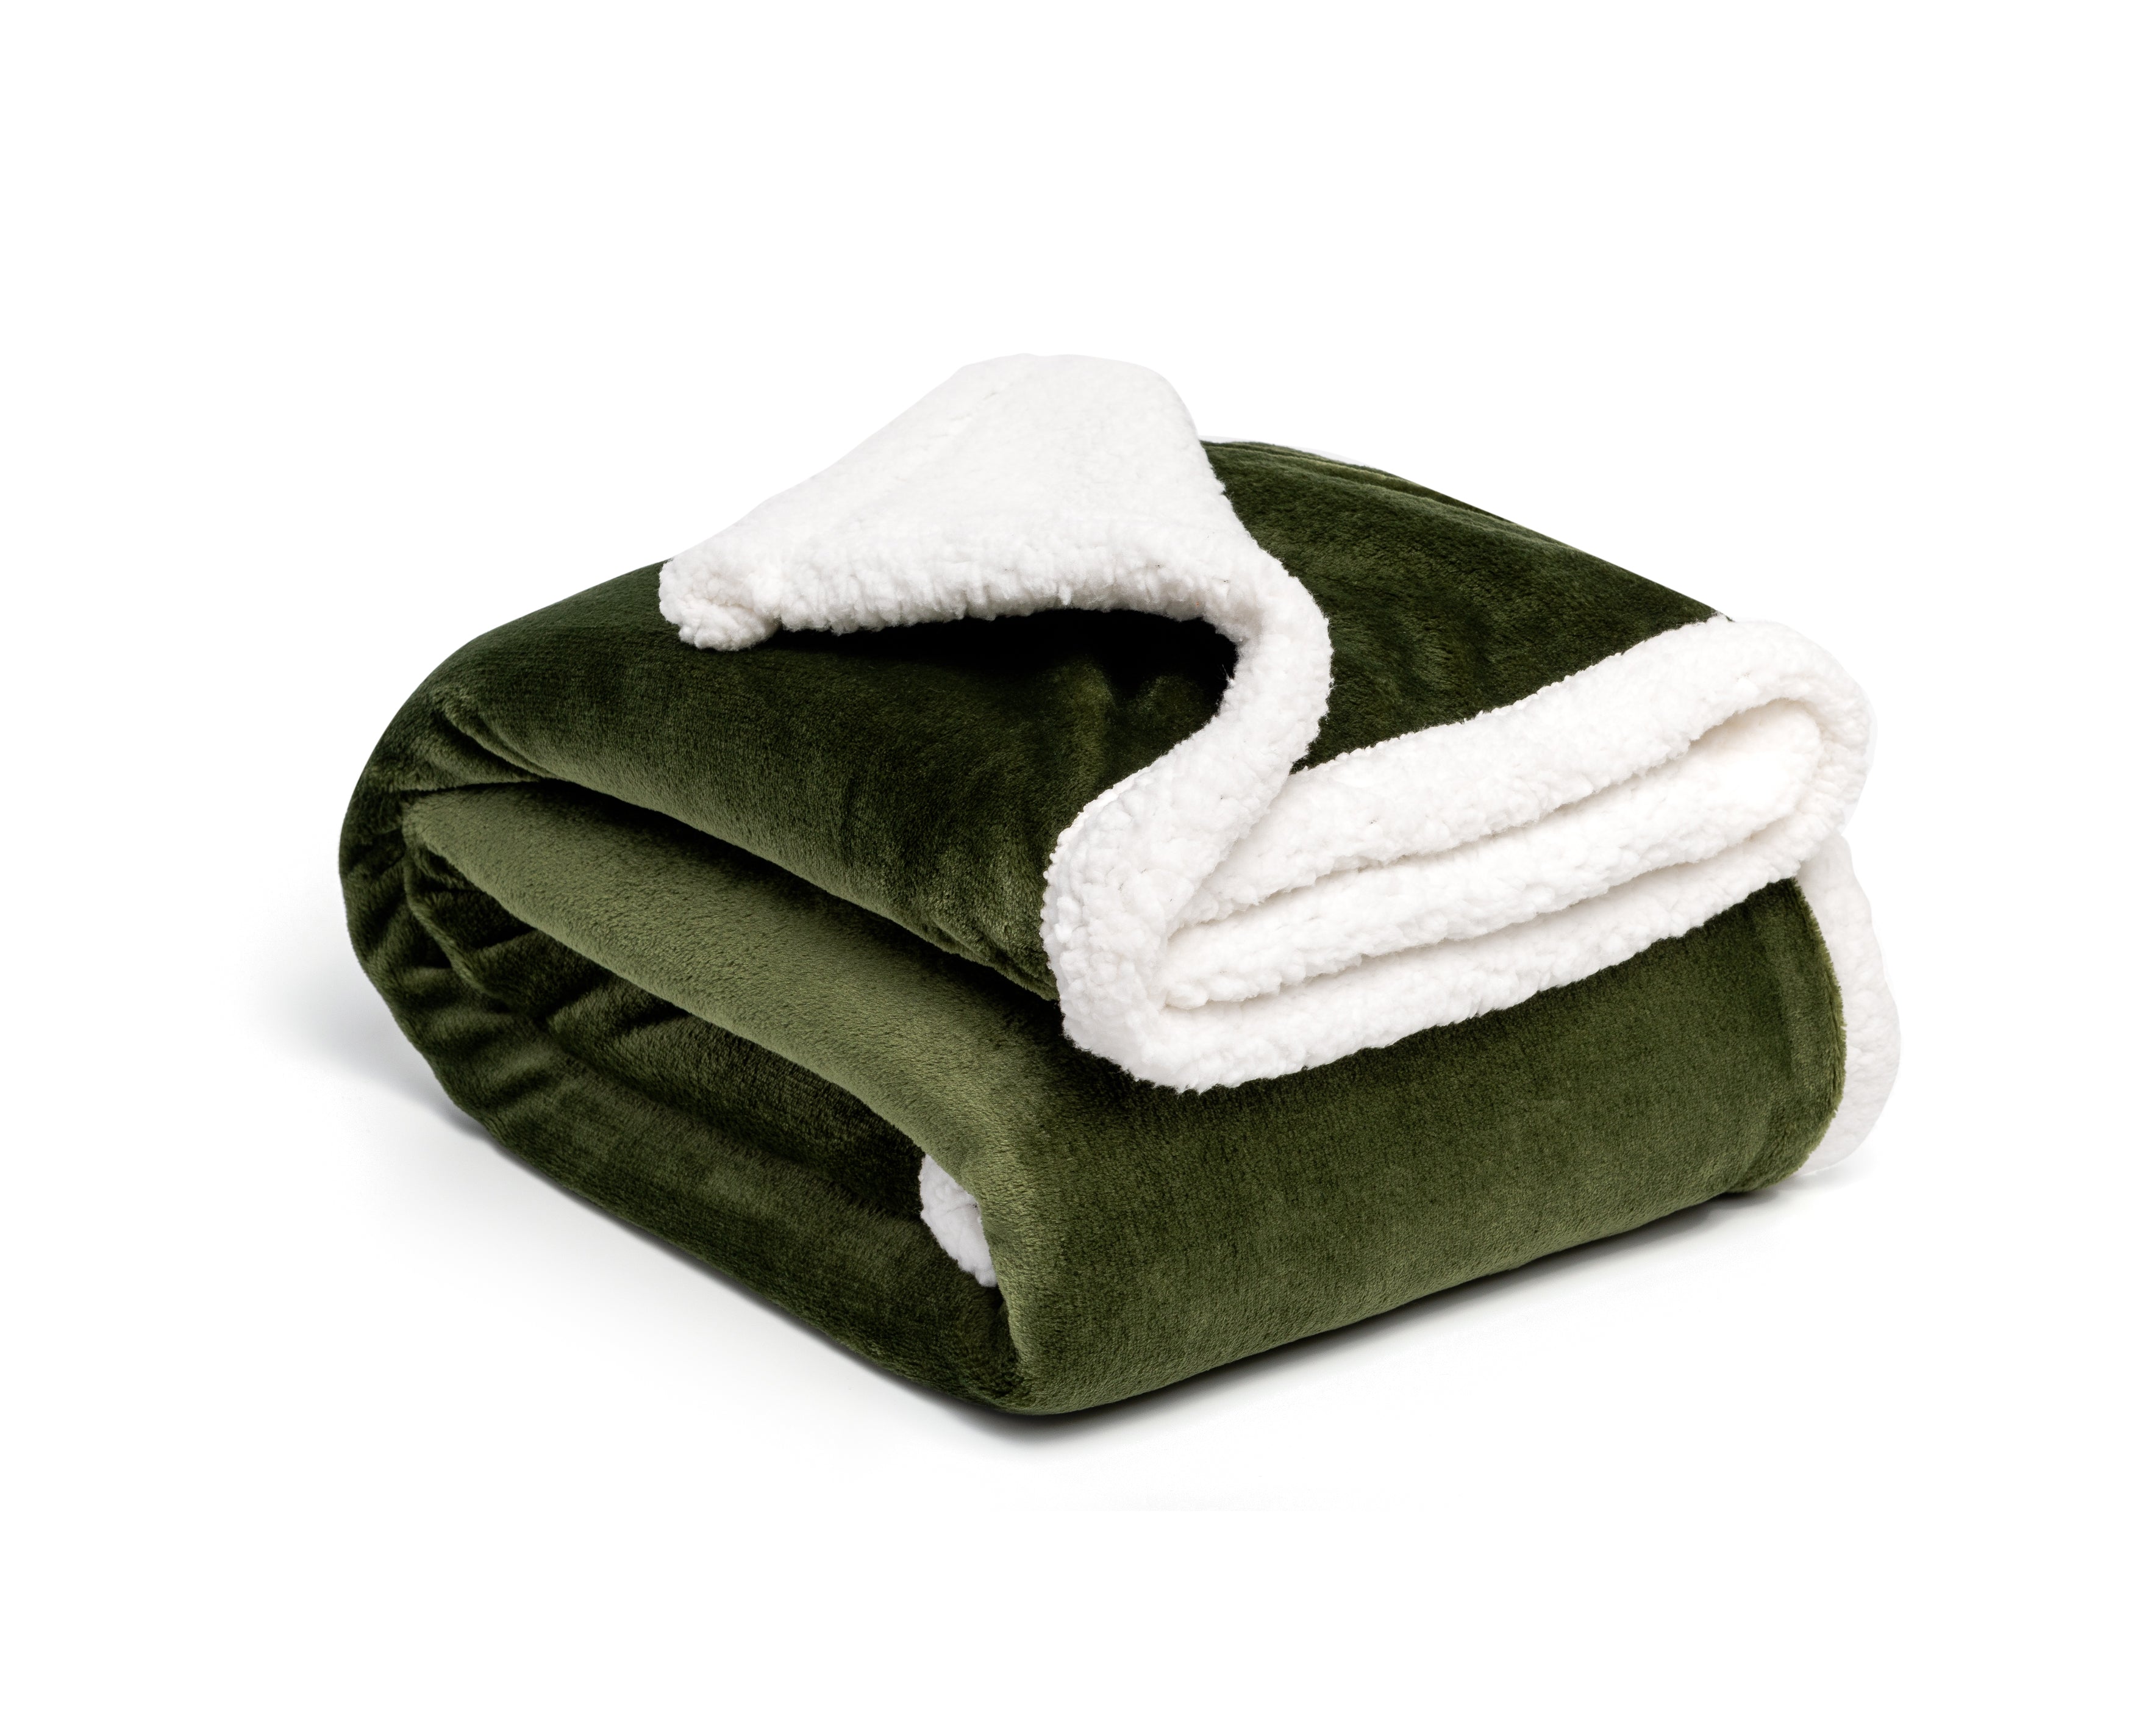 Fleece Sherpa Plush Throw Blanket